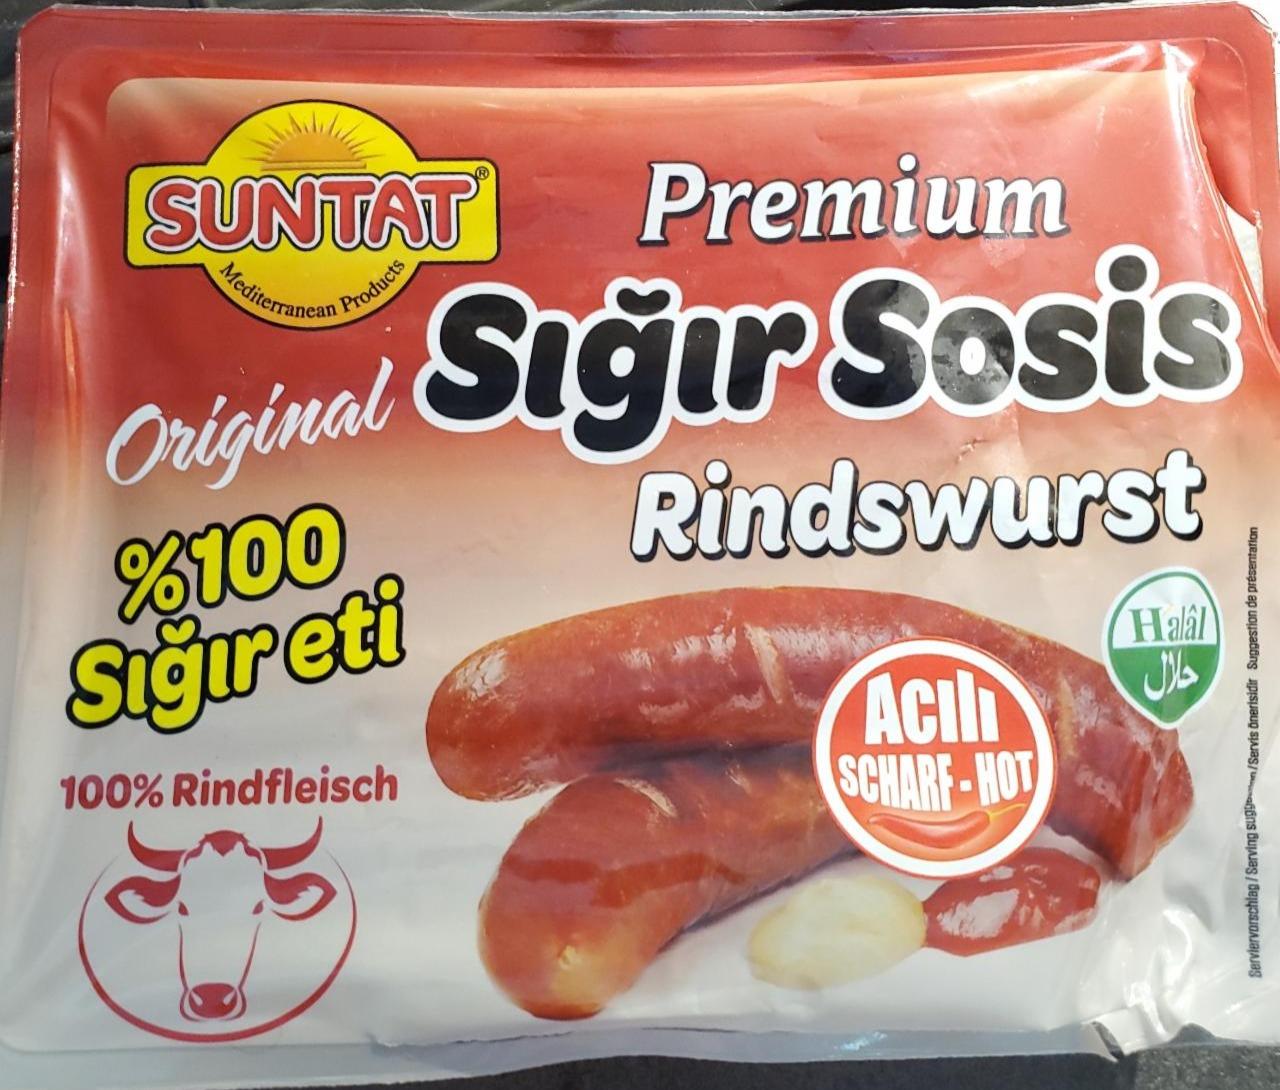 Fotografie - Premium Sigir Sosis Rindswurst Halal Suntat